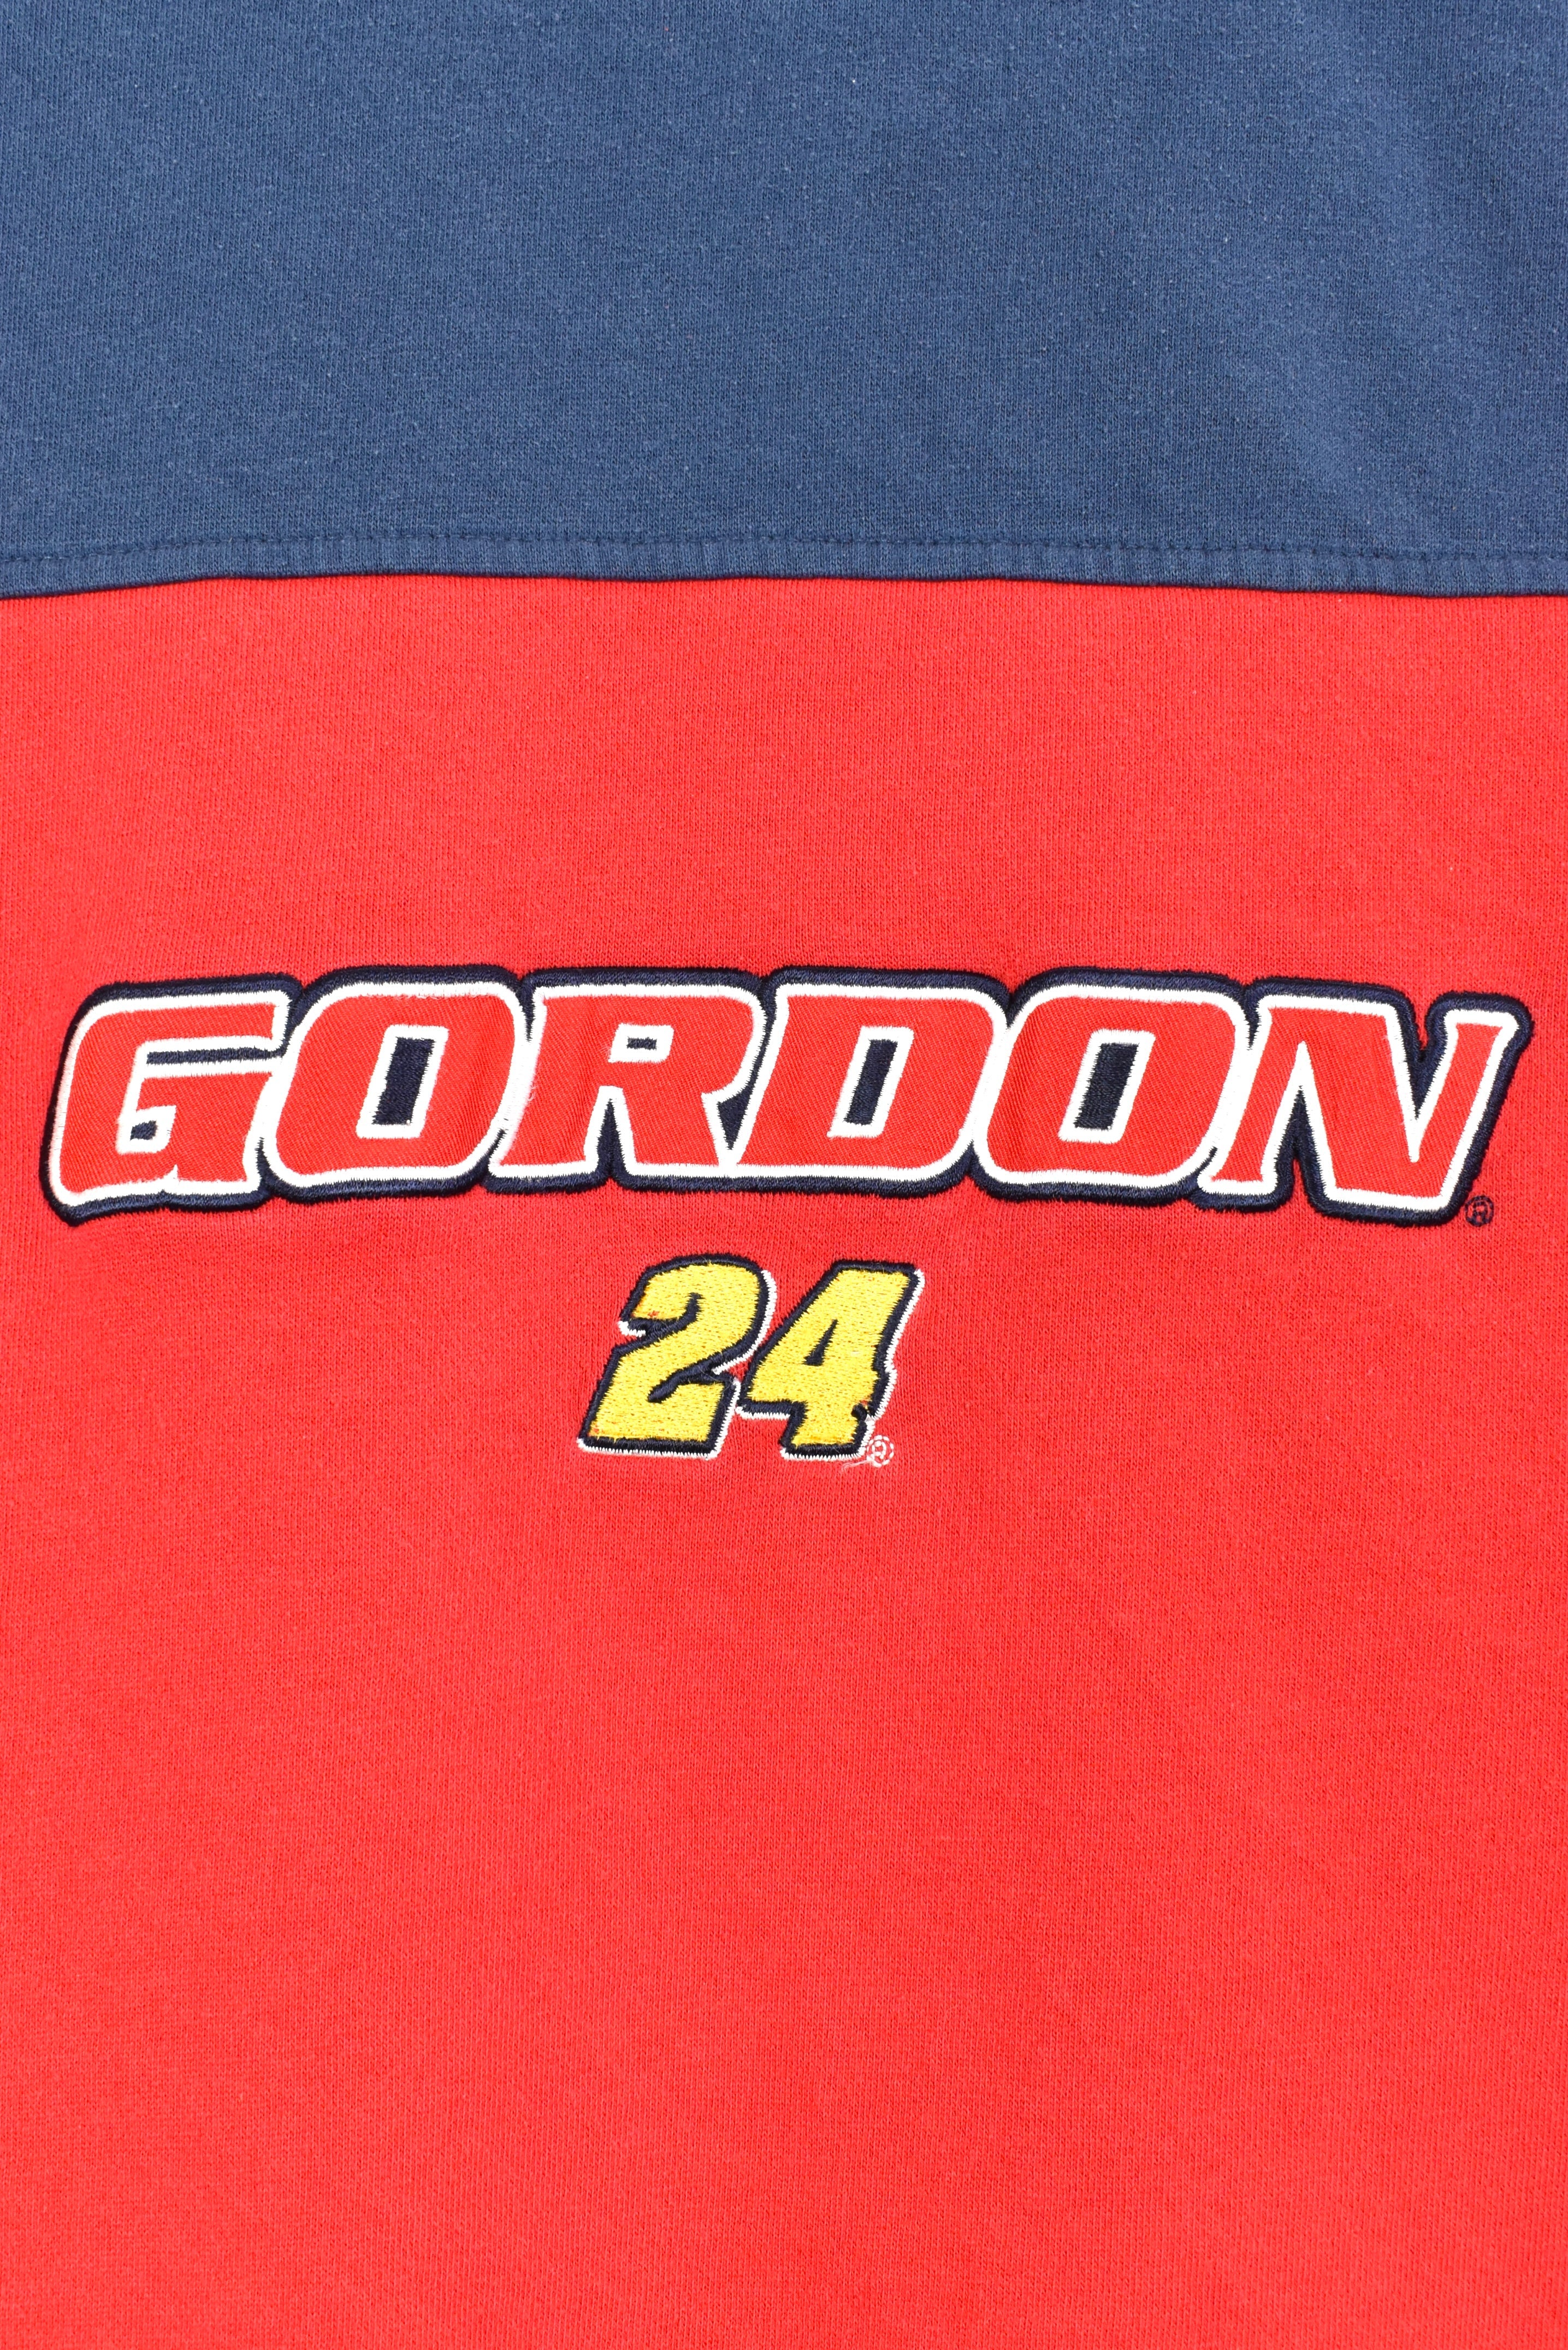 Vintage NASCAR sweatshirt, Jeff Gordon embroidered crewneck - AU XXXL NASCAR / RACING